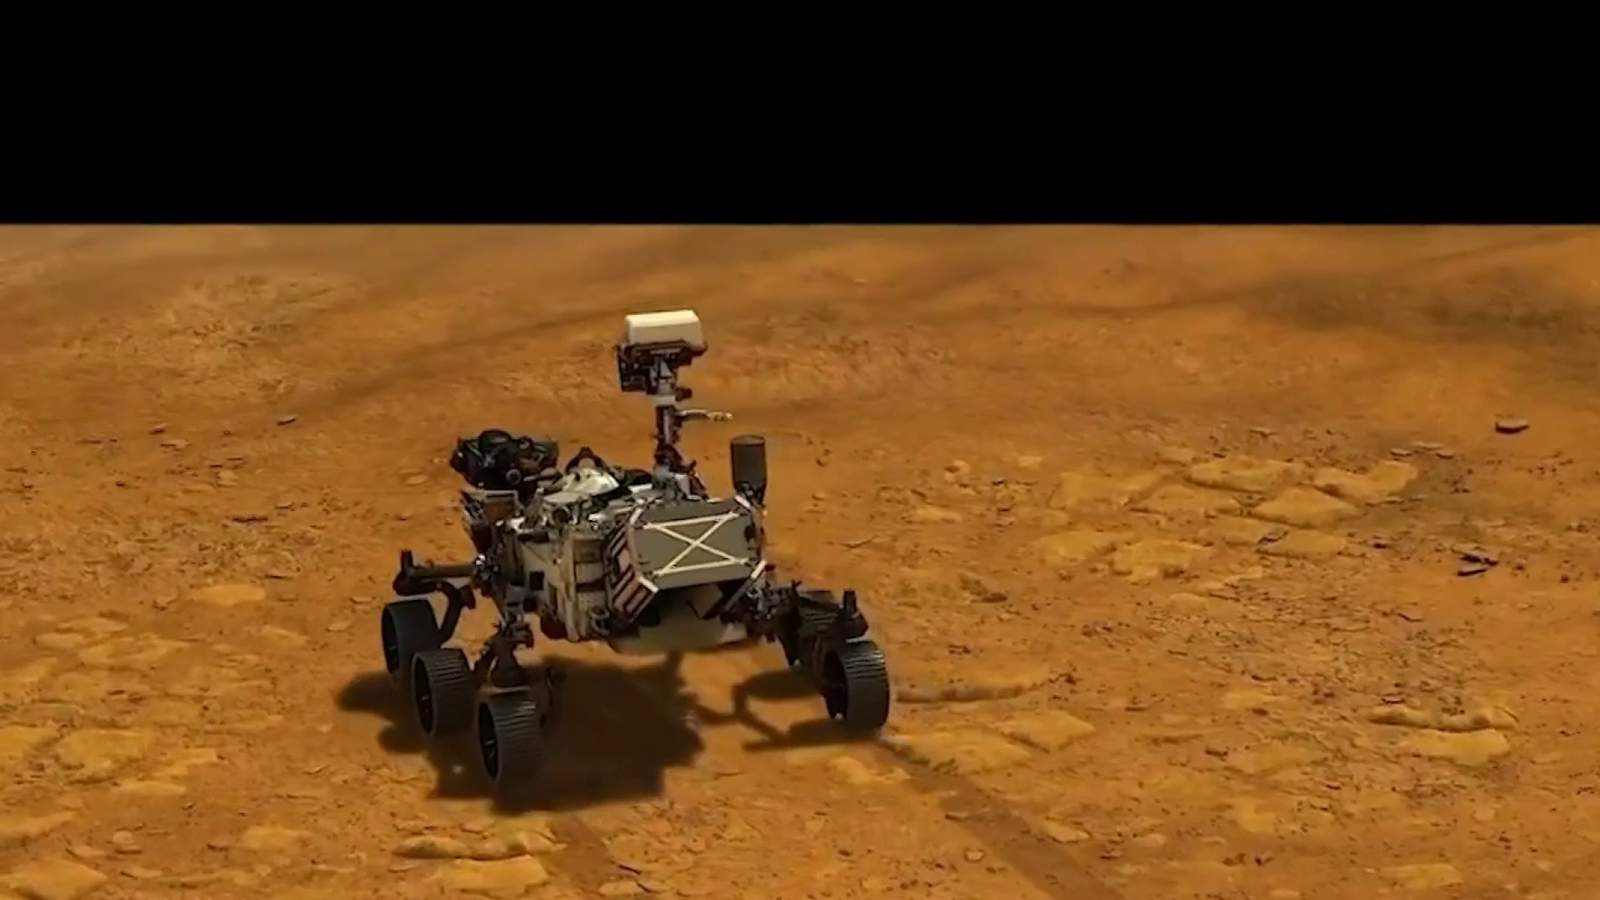 NASA’s next Mars rover is brawniest and brainiest one yet